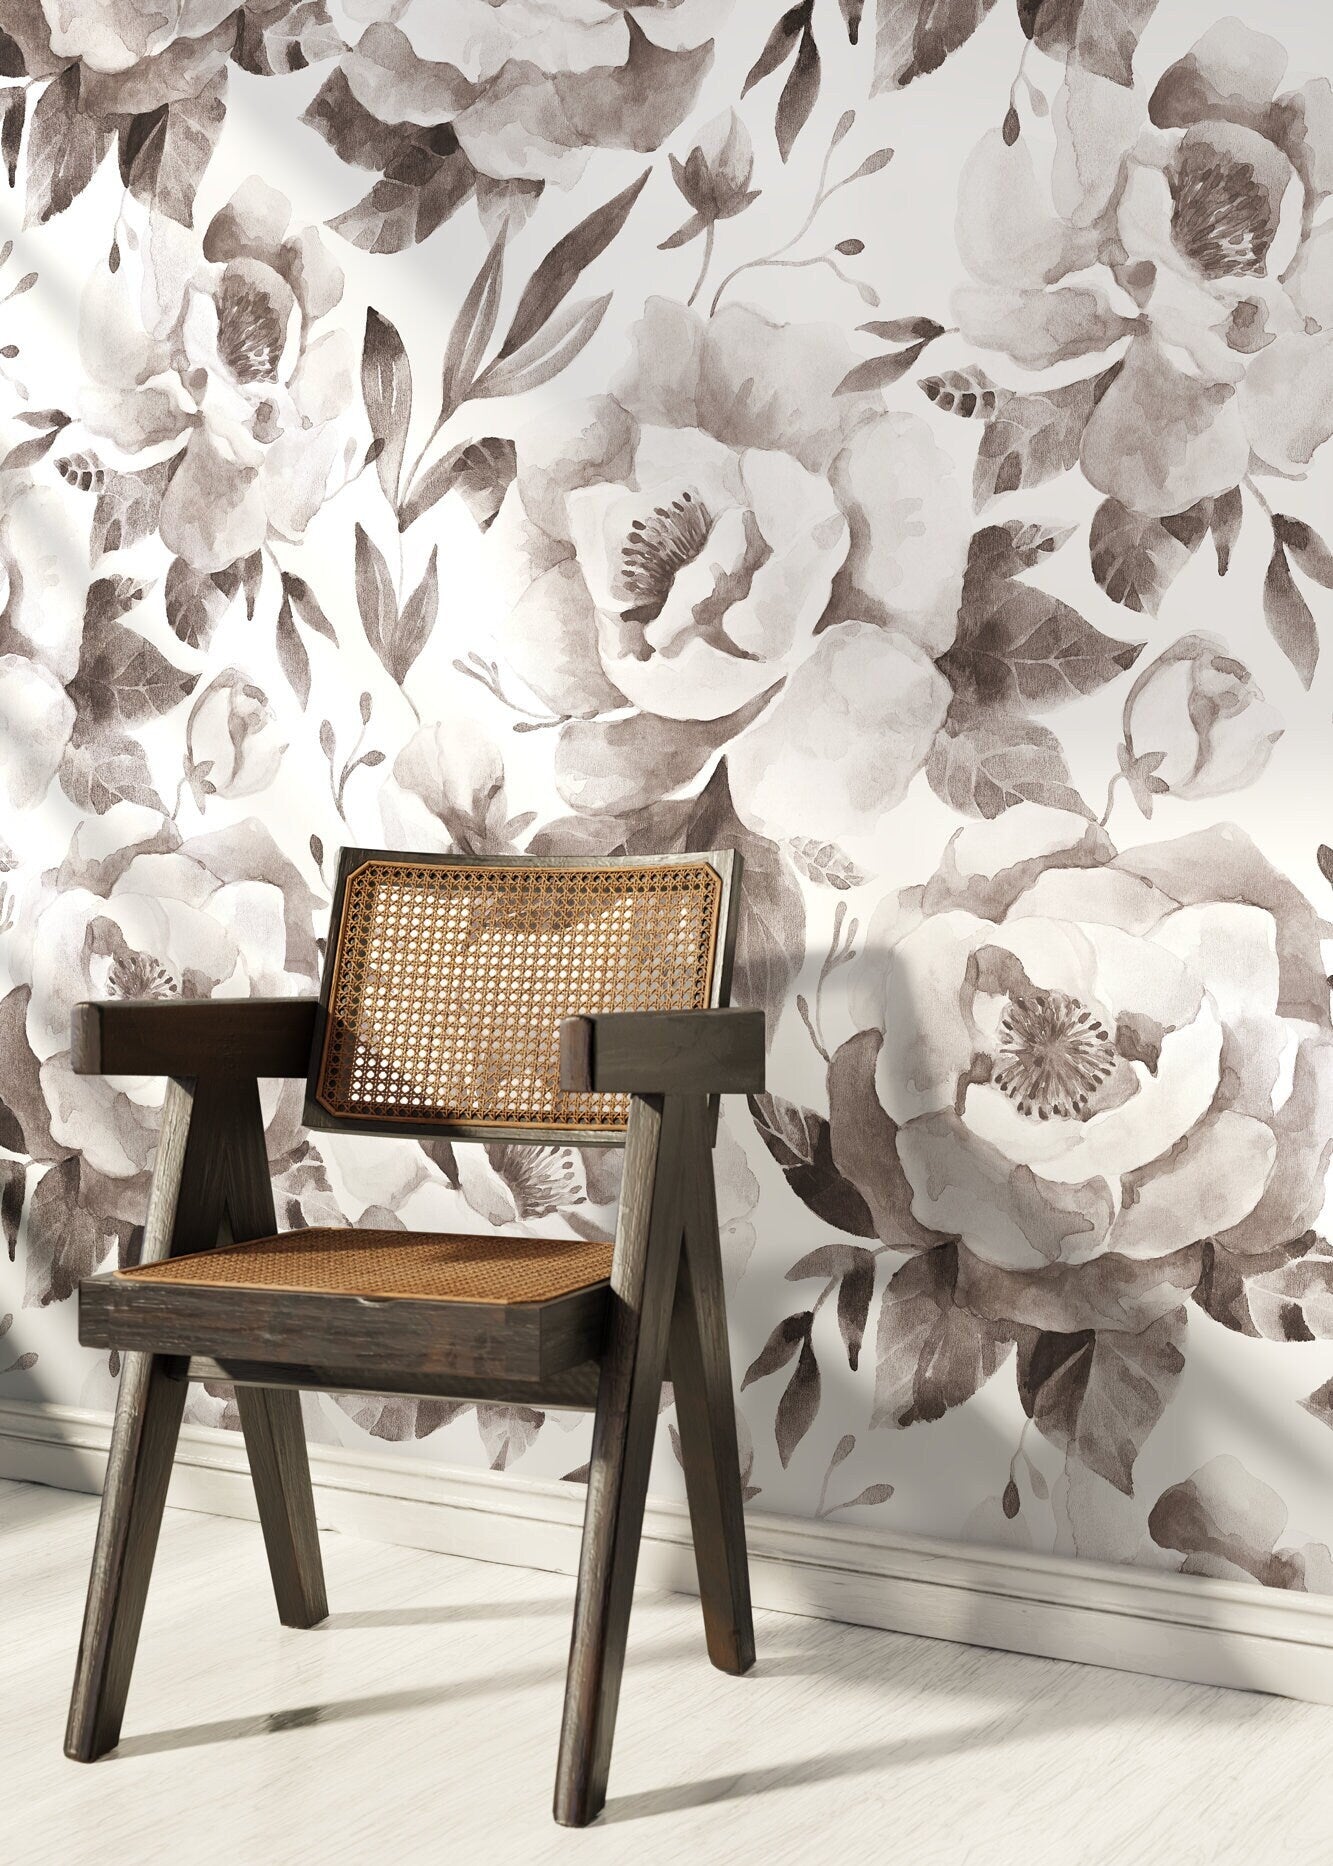 Tan Floral Wallpaper / Peel and Stick Wallpaper Removable Wallpaper Home Decor Wall Art Wall Decor Room Decor - C960